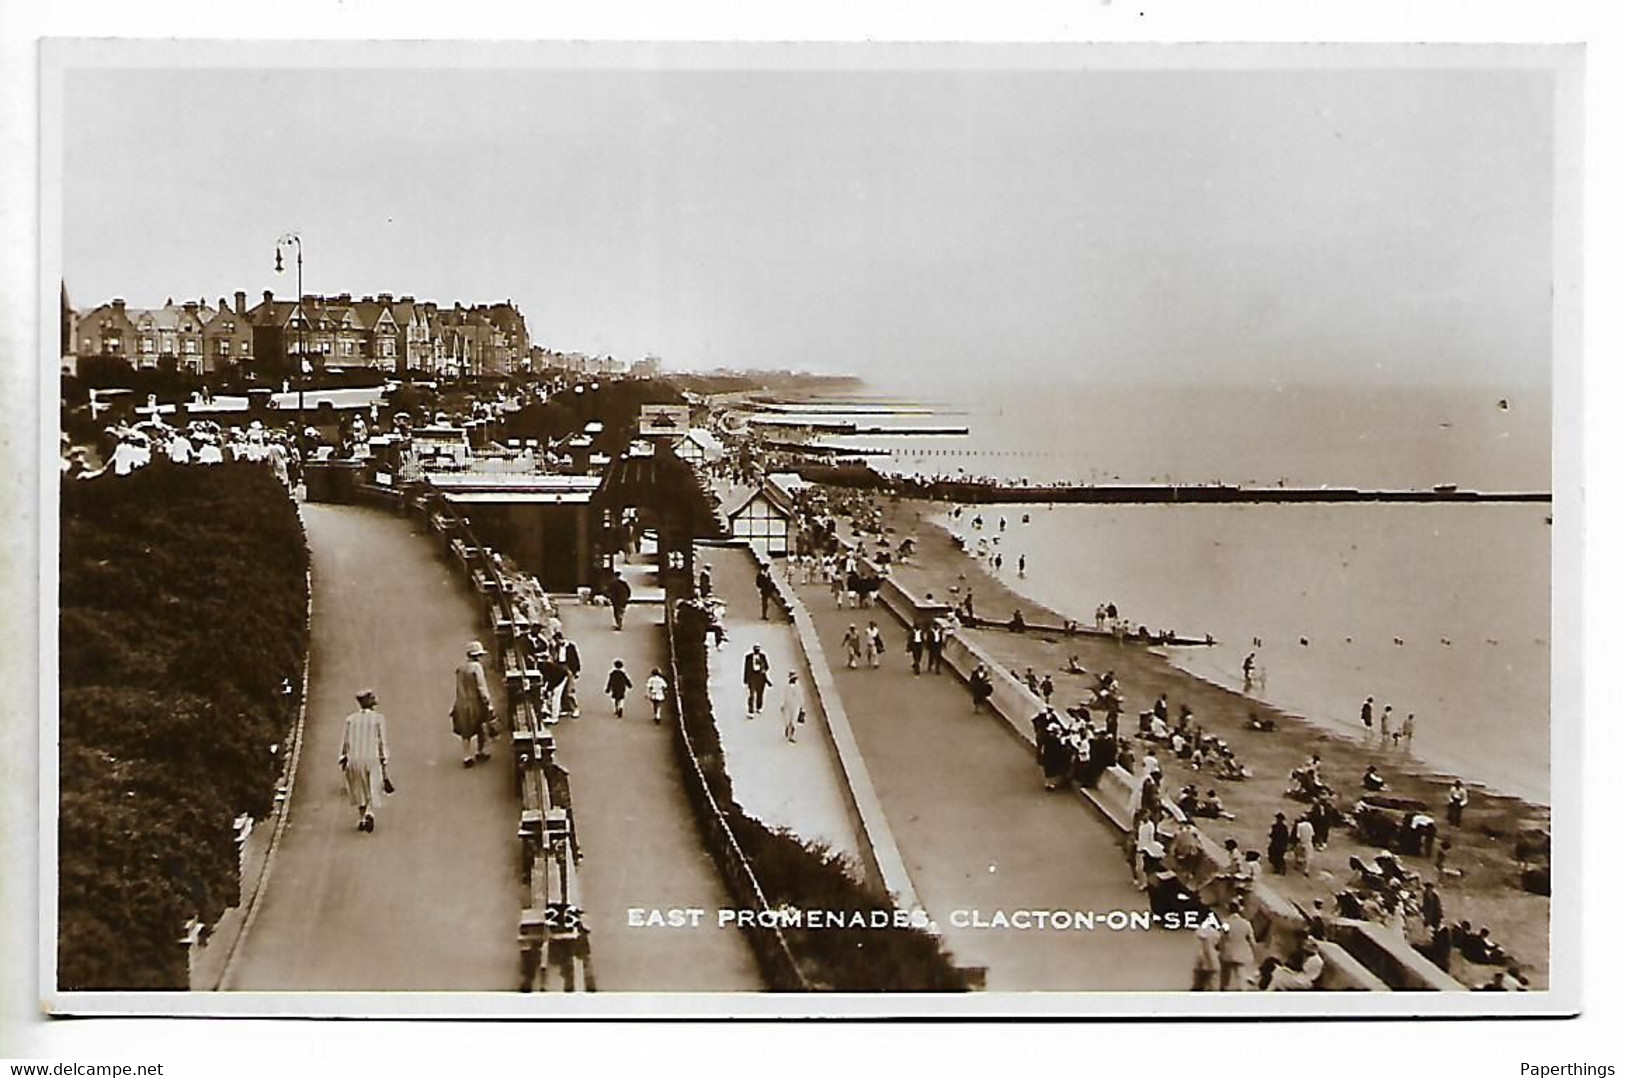 Real Photo Postcard, Clacton-on-sea, East Promenade, People, Beach, Footpath. - Clacton On Sea